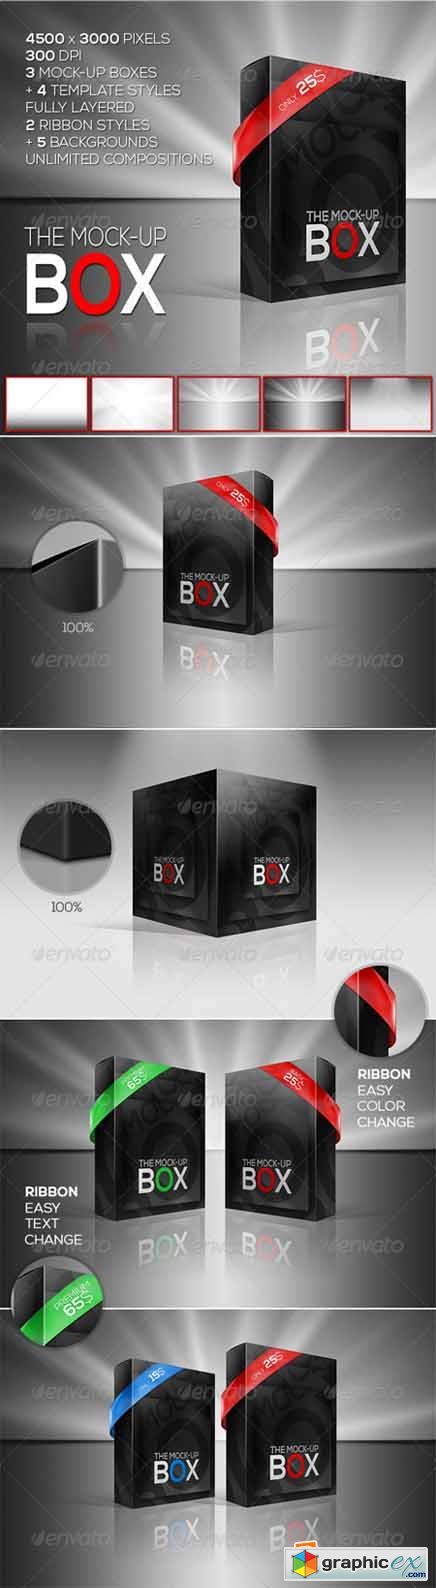 The Mock-Up Box | 7 Photorealistic Styles 3117912